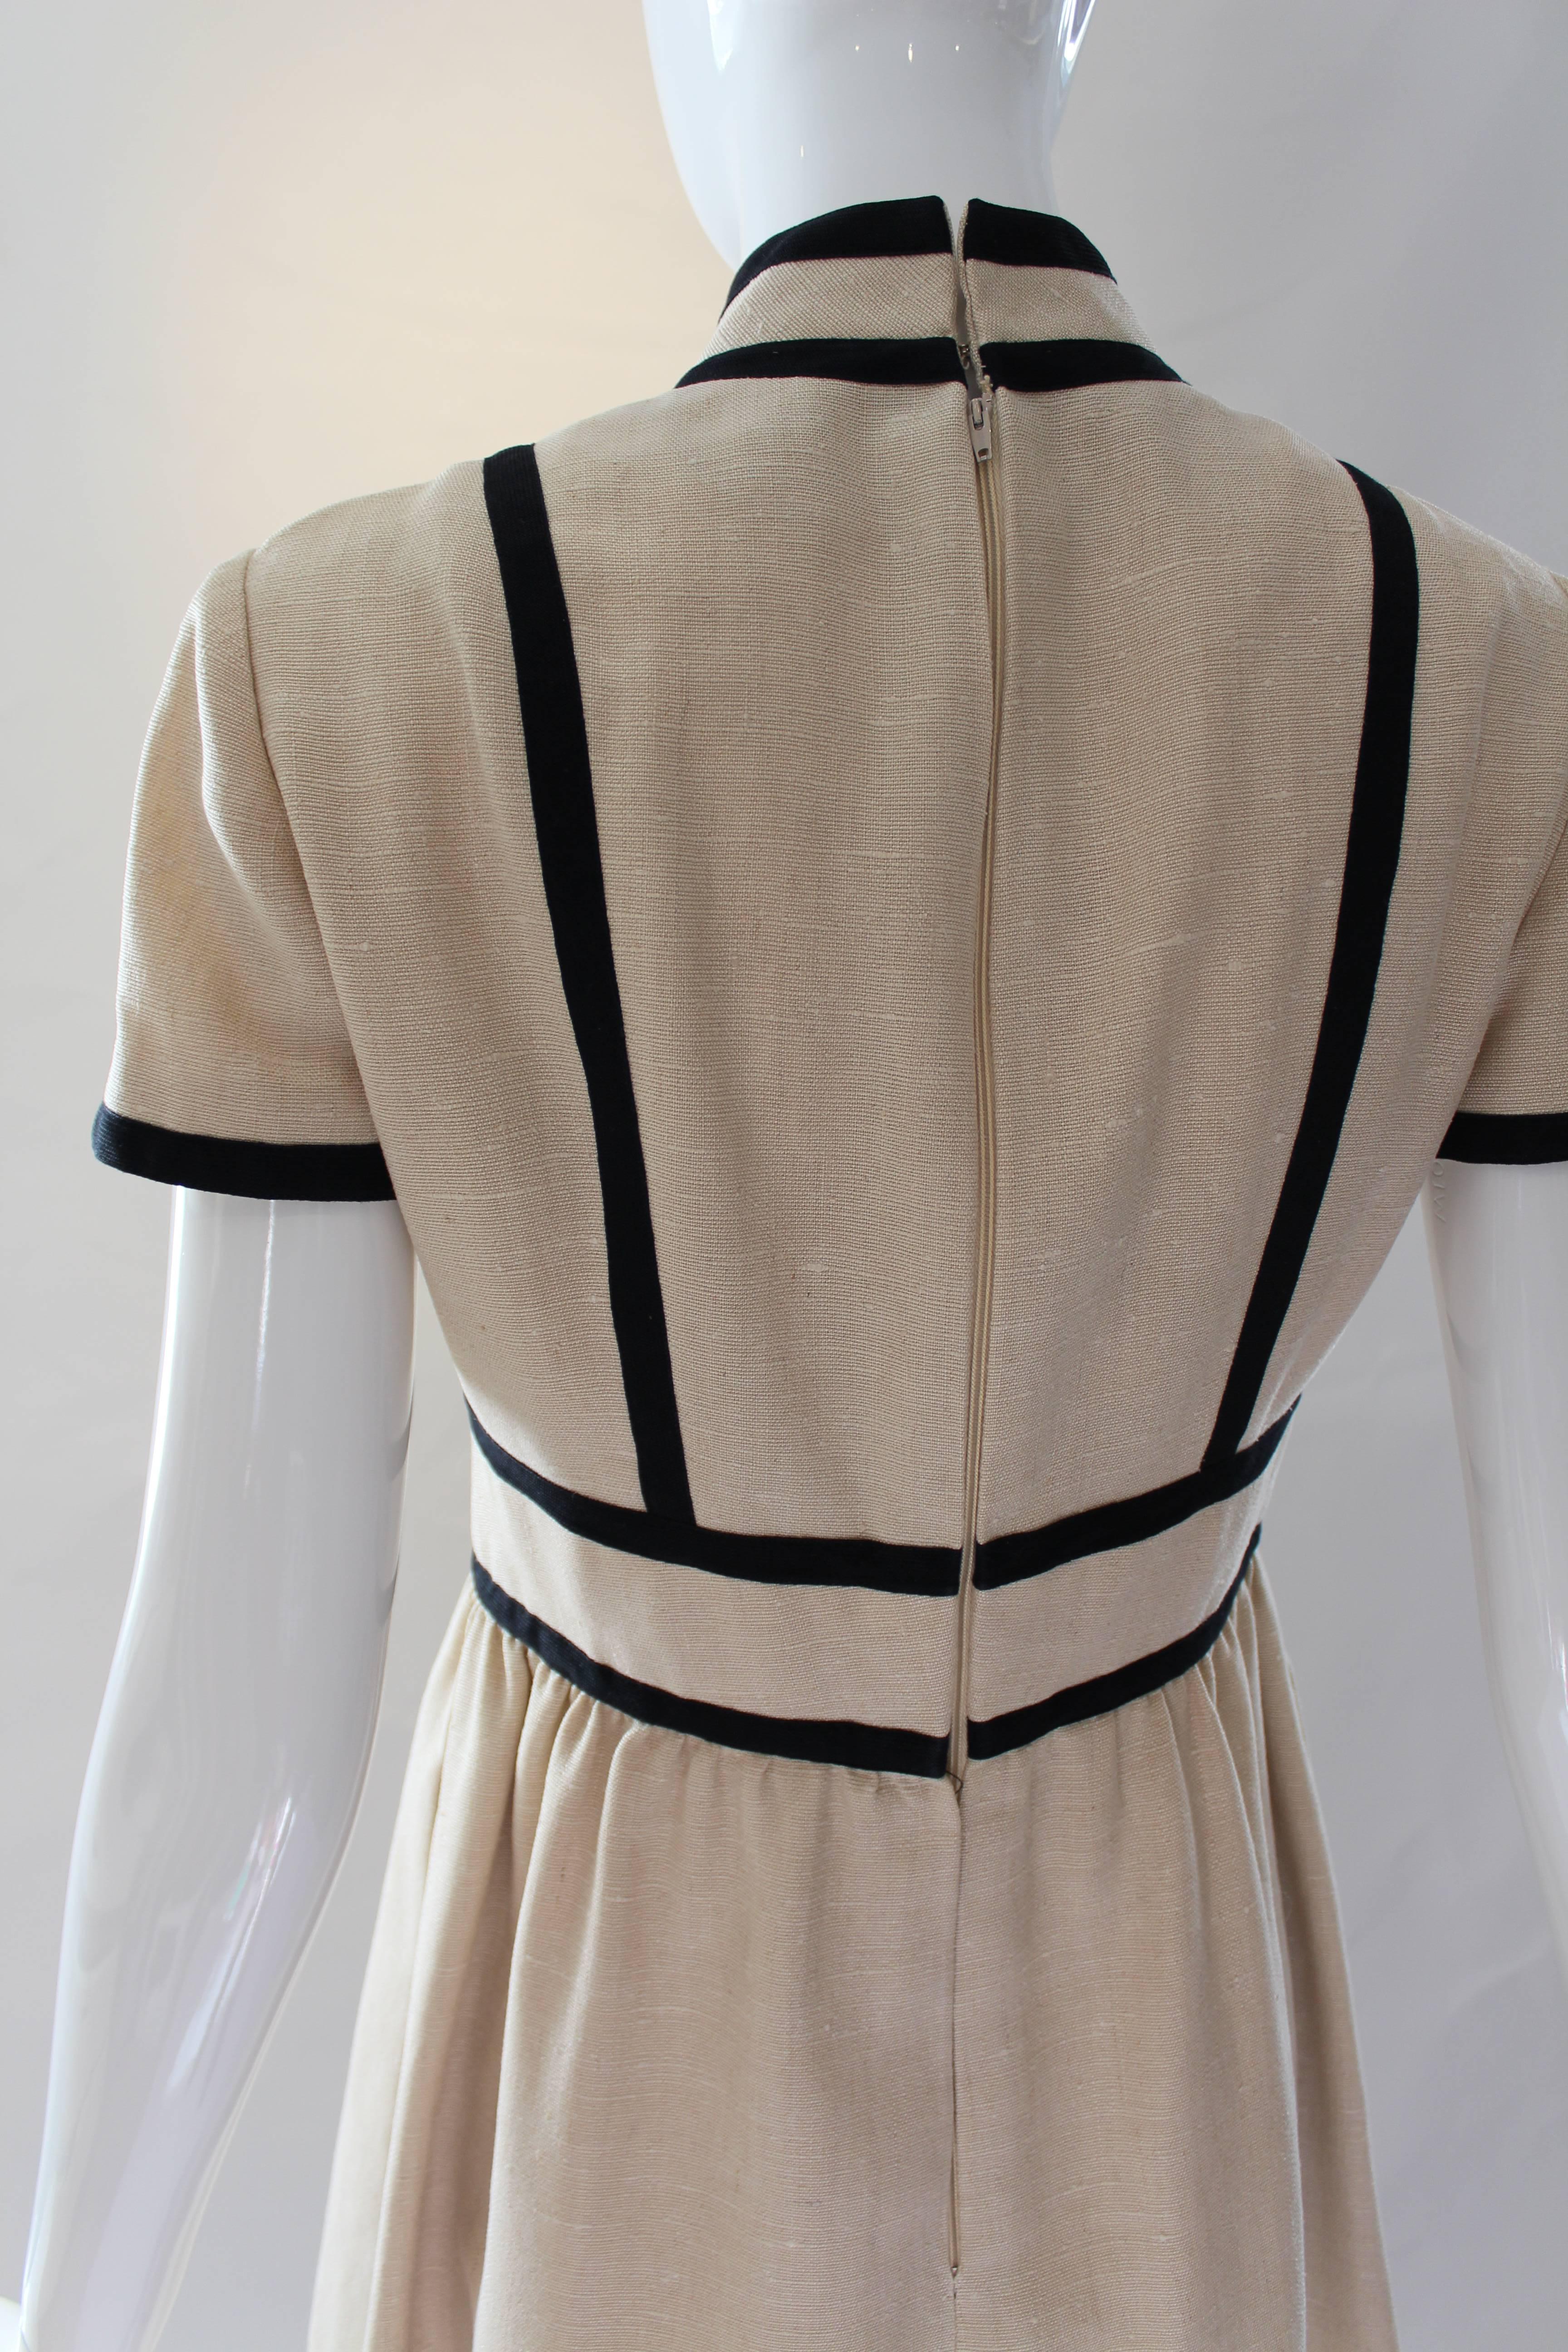 1960s Geoffrey Beene Linen Dress 3